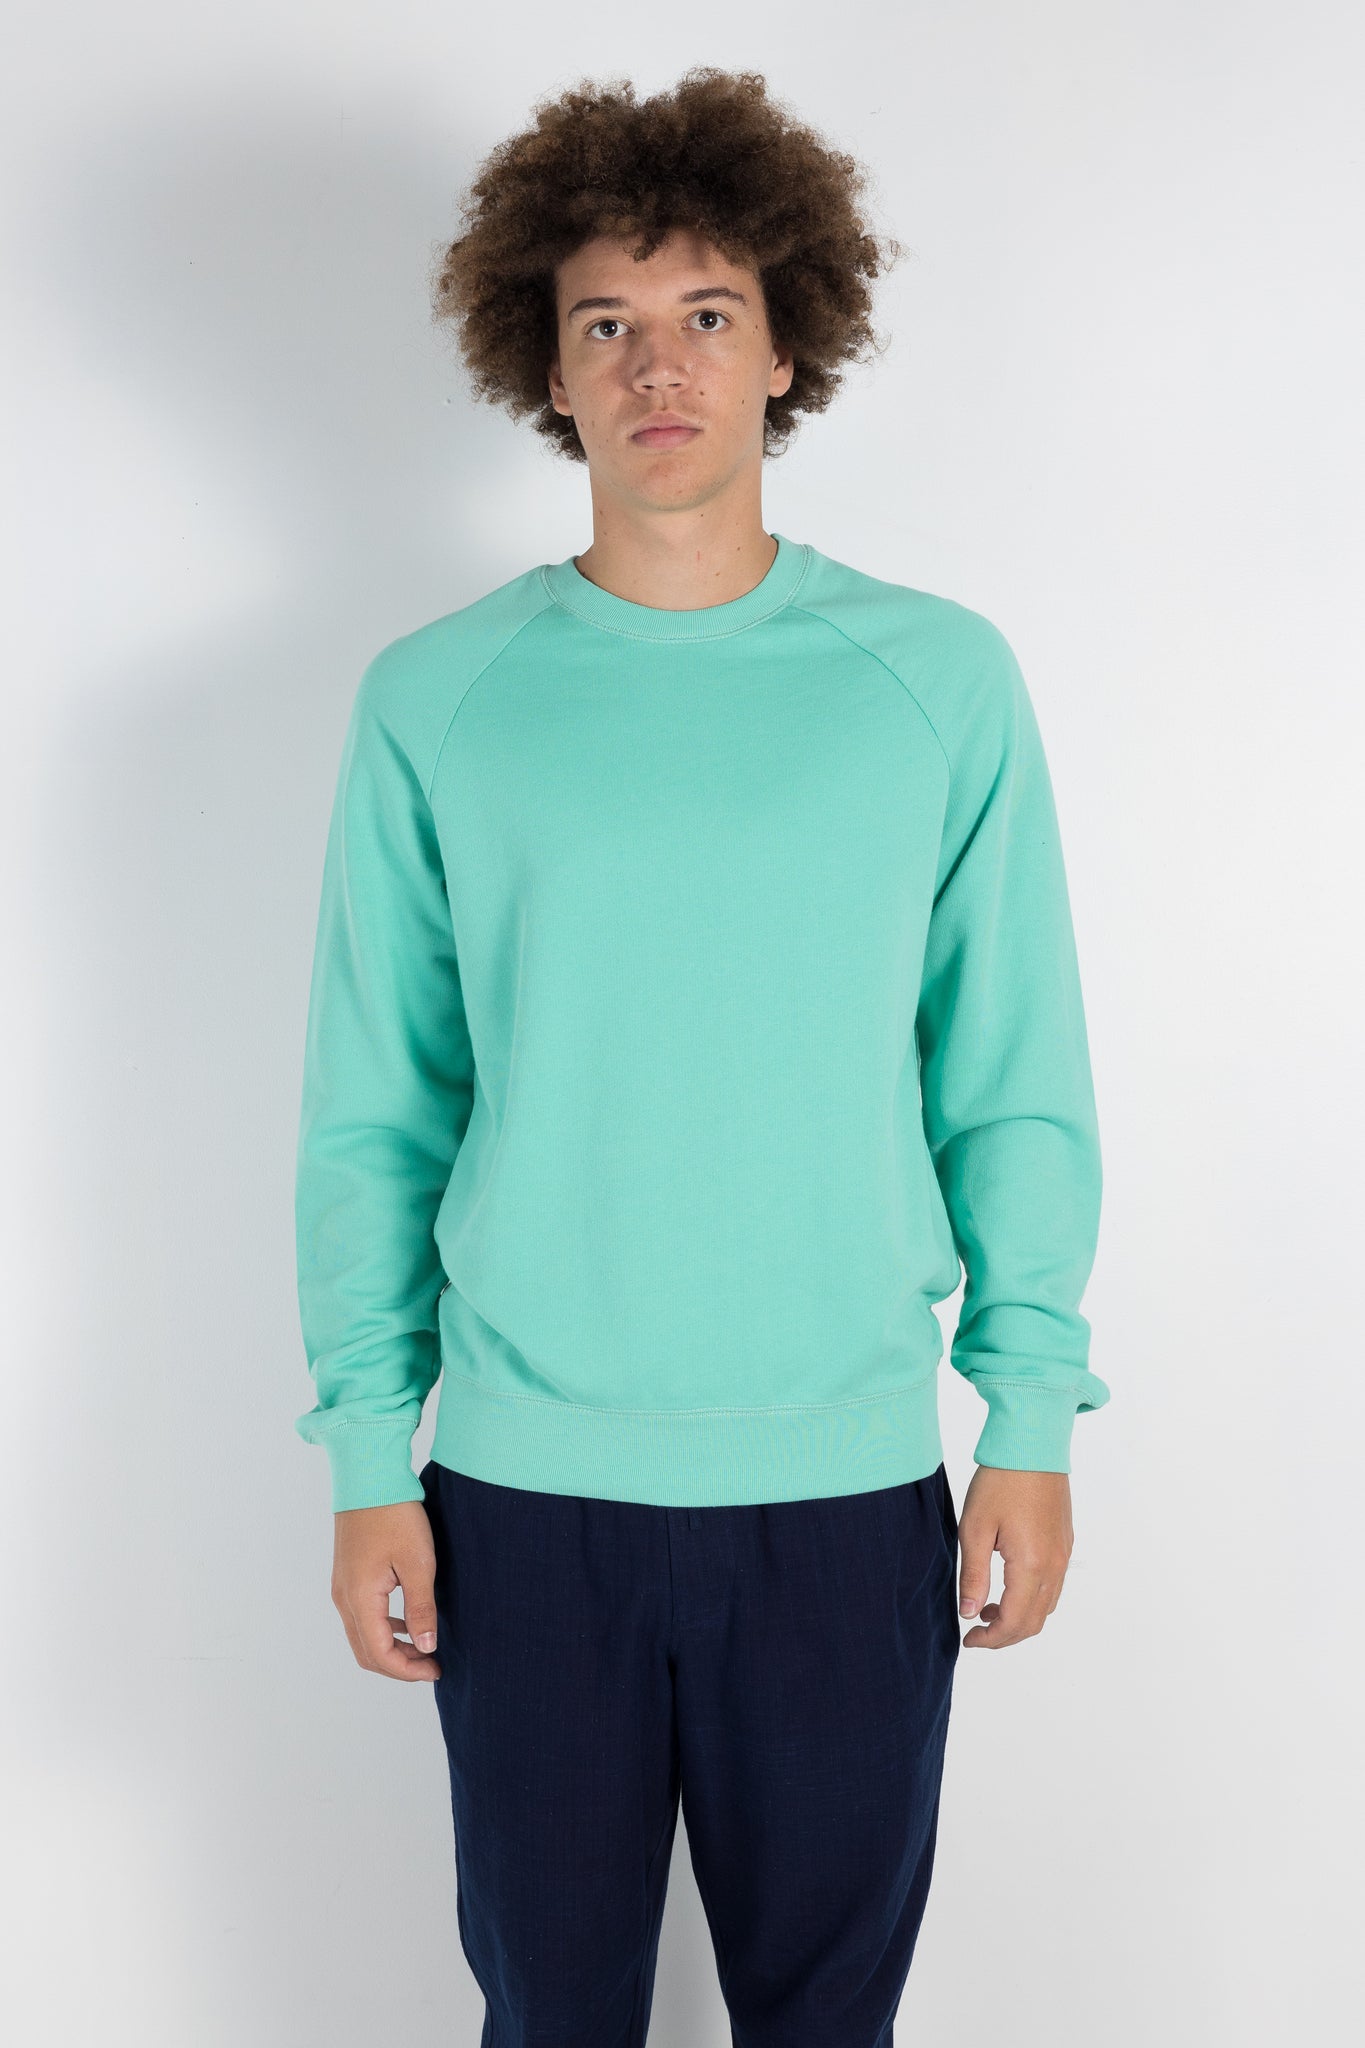 Mens Sweatshirt | La Paz Cunha Sweatshirt | The standard Store